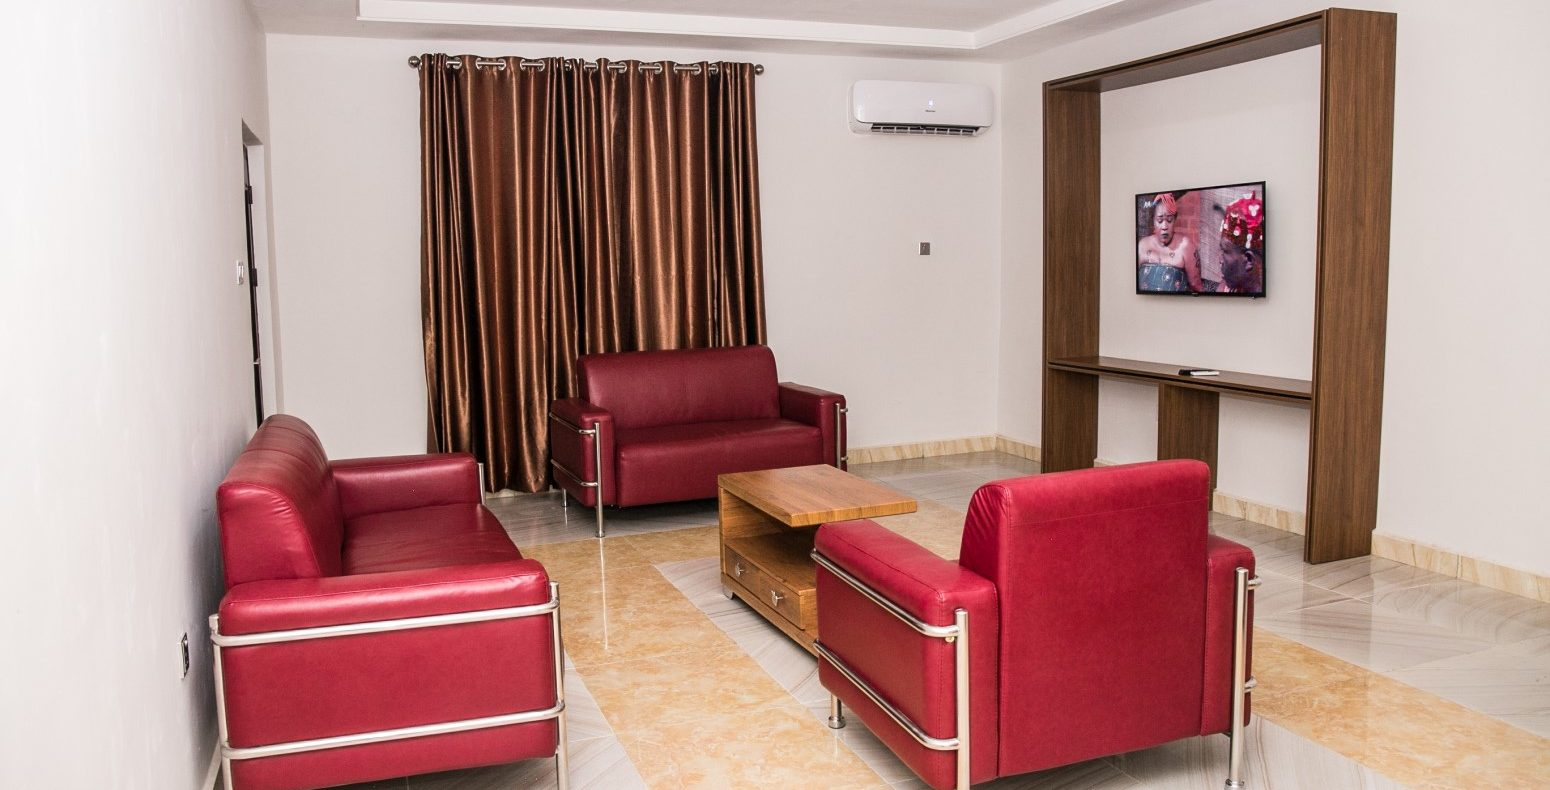 Hotel Executive Room One Bedroom Suite In Abuja Nigeria